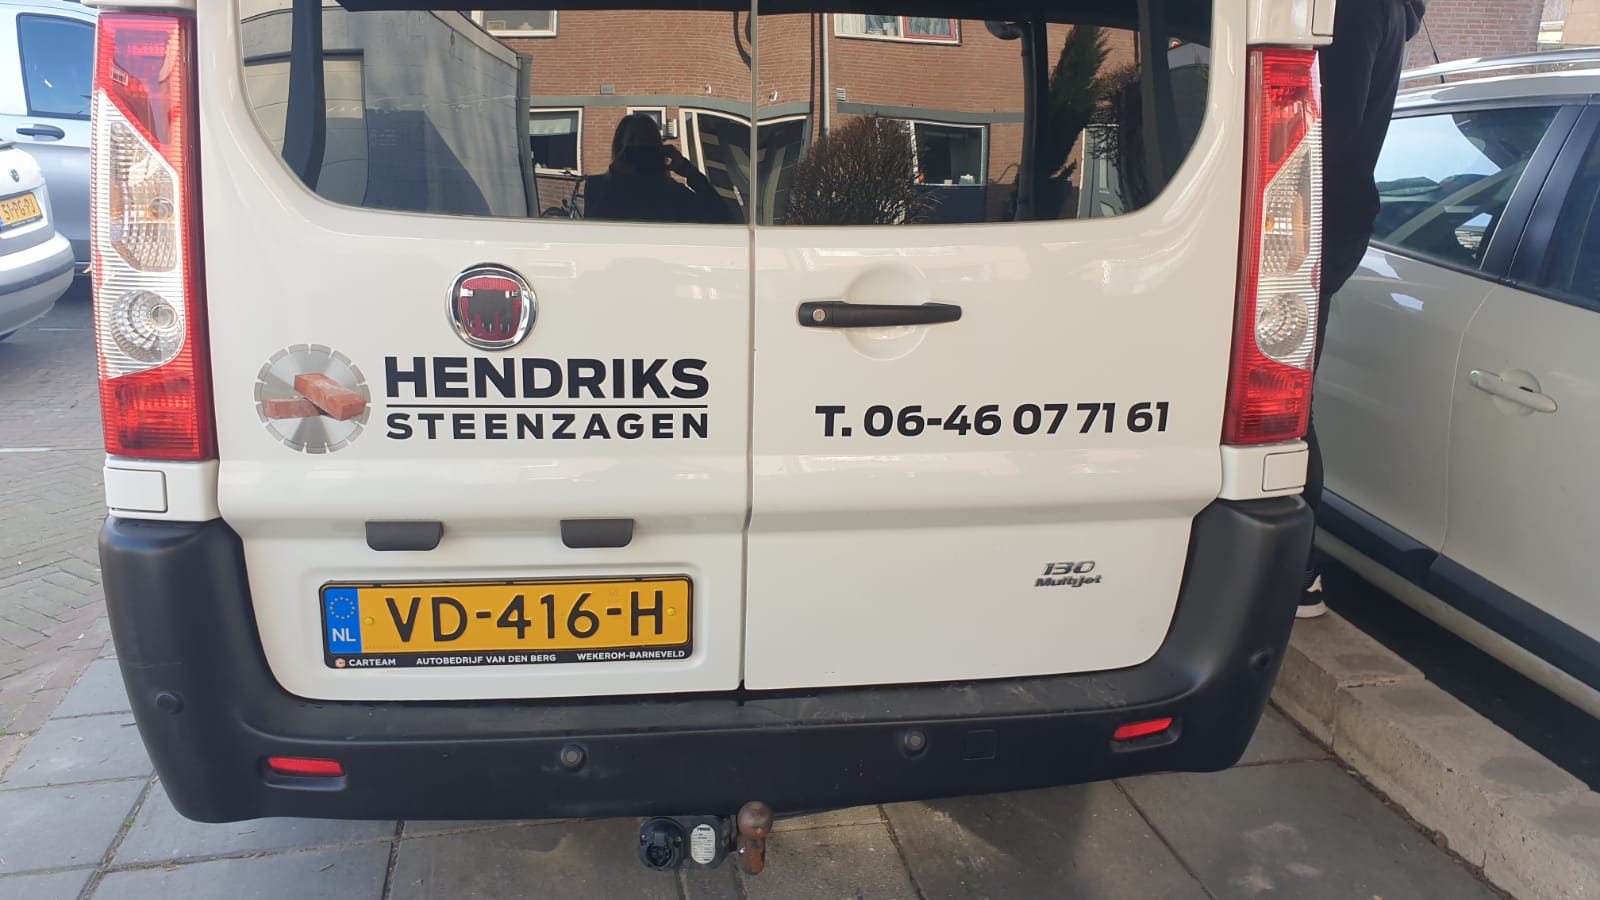 Hendriks Steenzagen bus